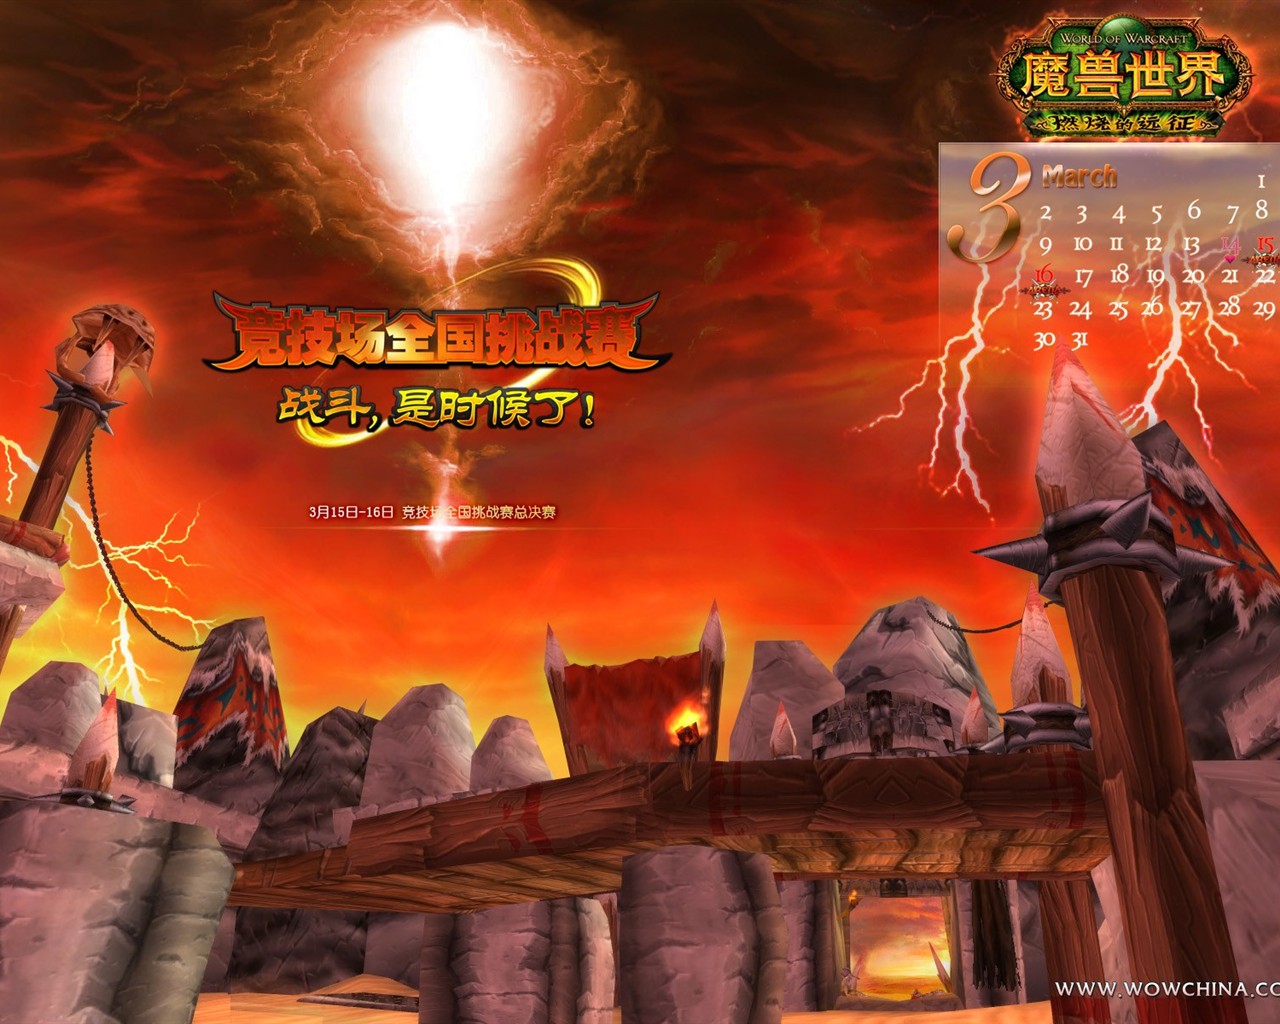 World of Warcraft: Fond d'écran officiel de Burning Crusade (2) #16 - 1280x1024